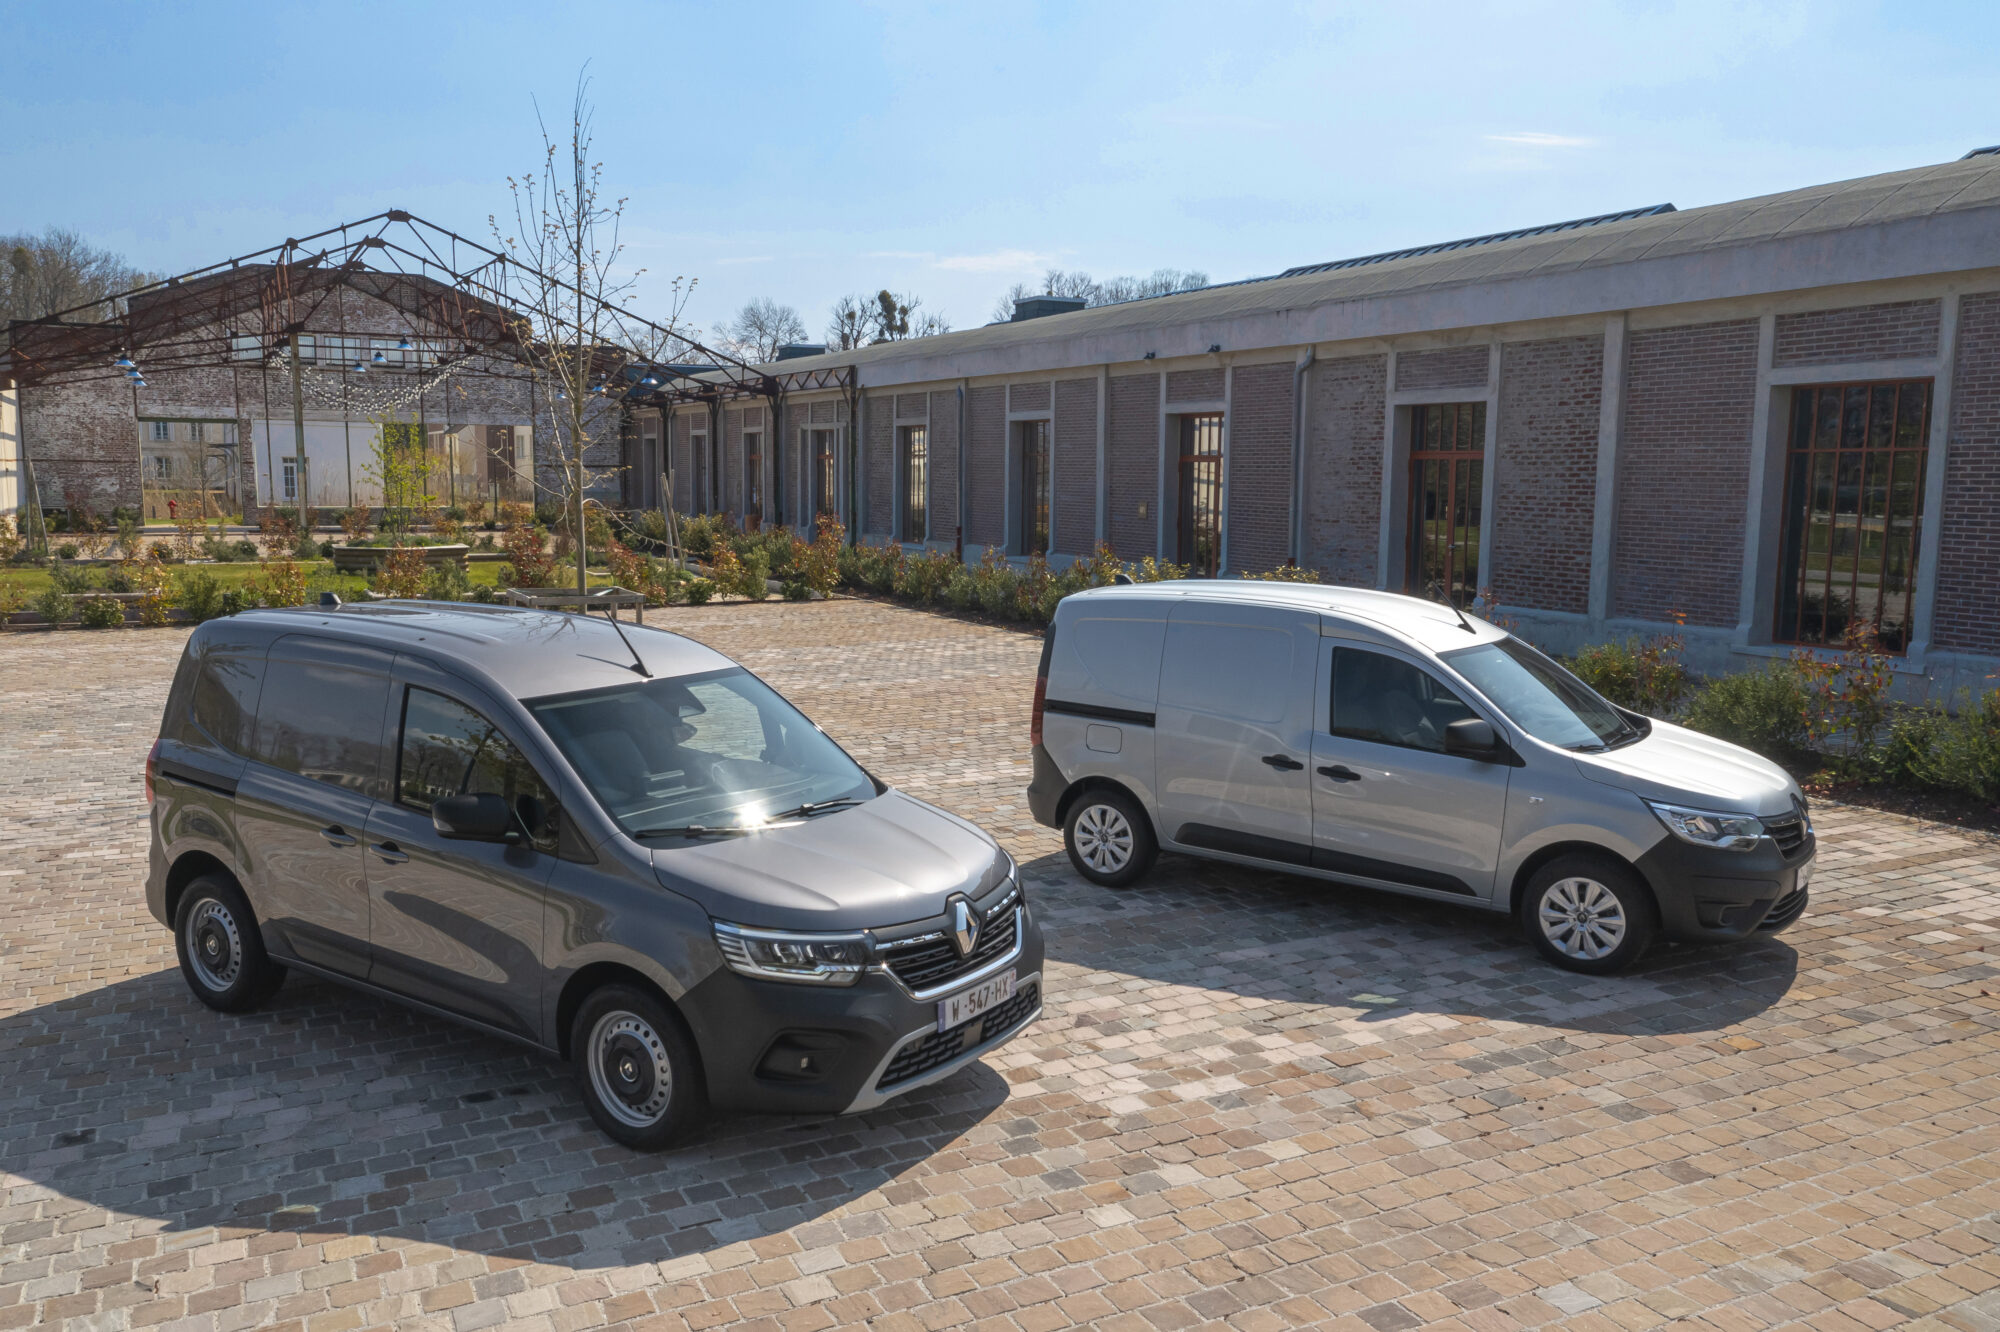 2021 - New Renault Kangoo Van and New Renault Express Van - Tests drive